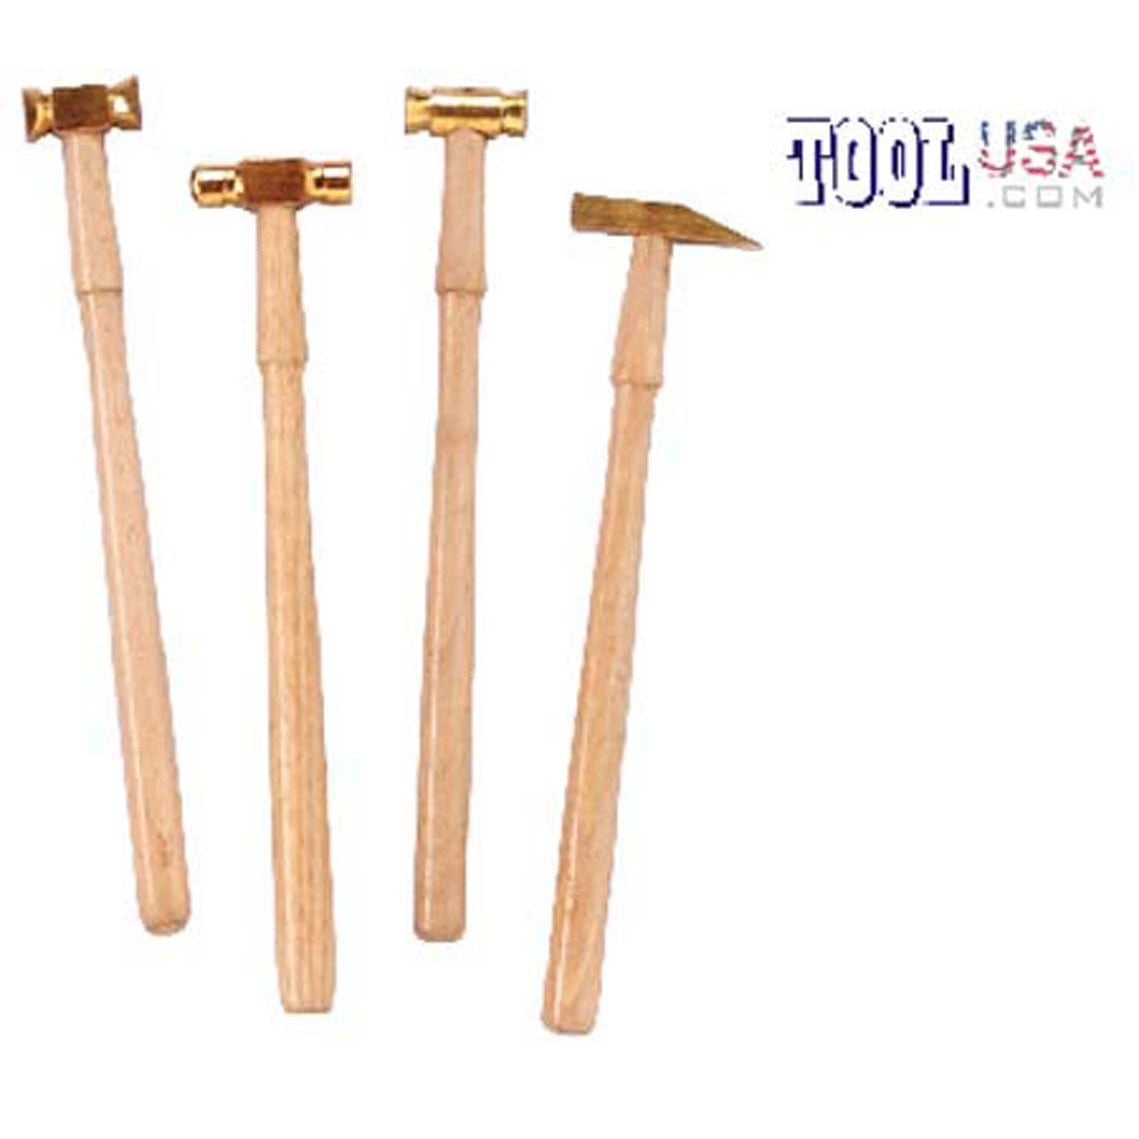 HAWK Brass Head Hammer Set, 4 Distinct Styles, 7.5 (19 cm) Wooden  Handles, Spark-Free Brass, 1/2 (1.3 cm) Aluminum Heads